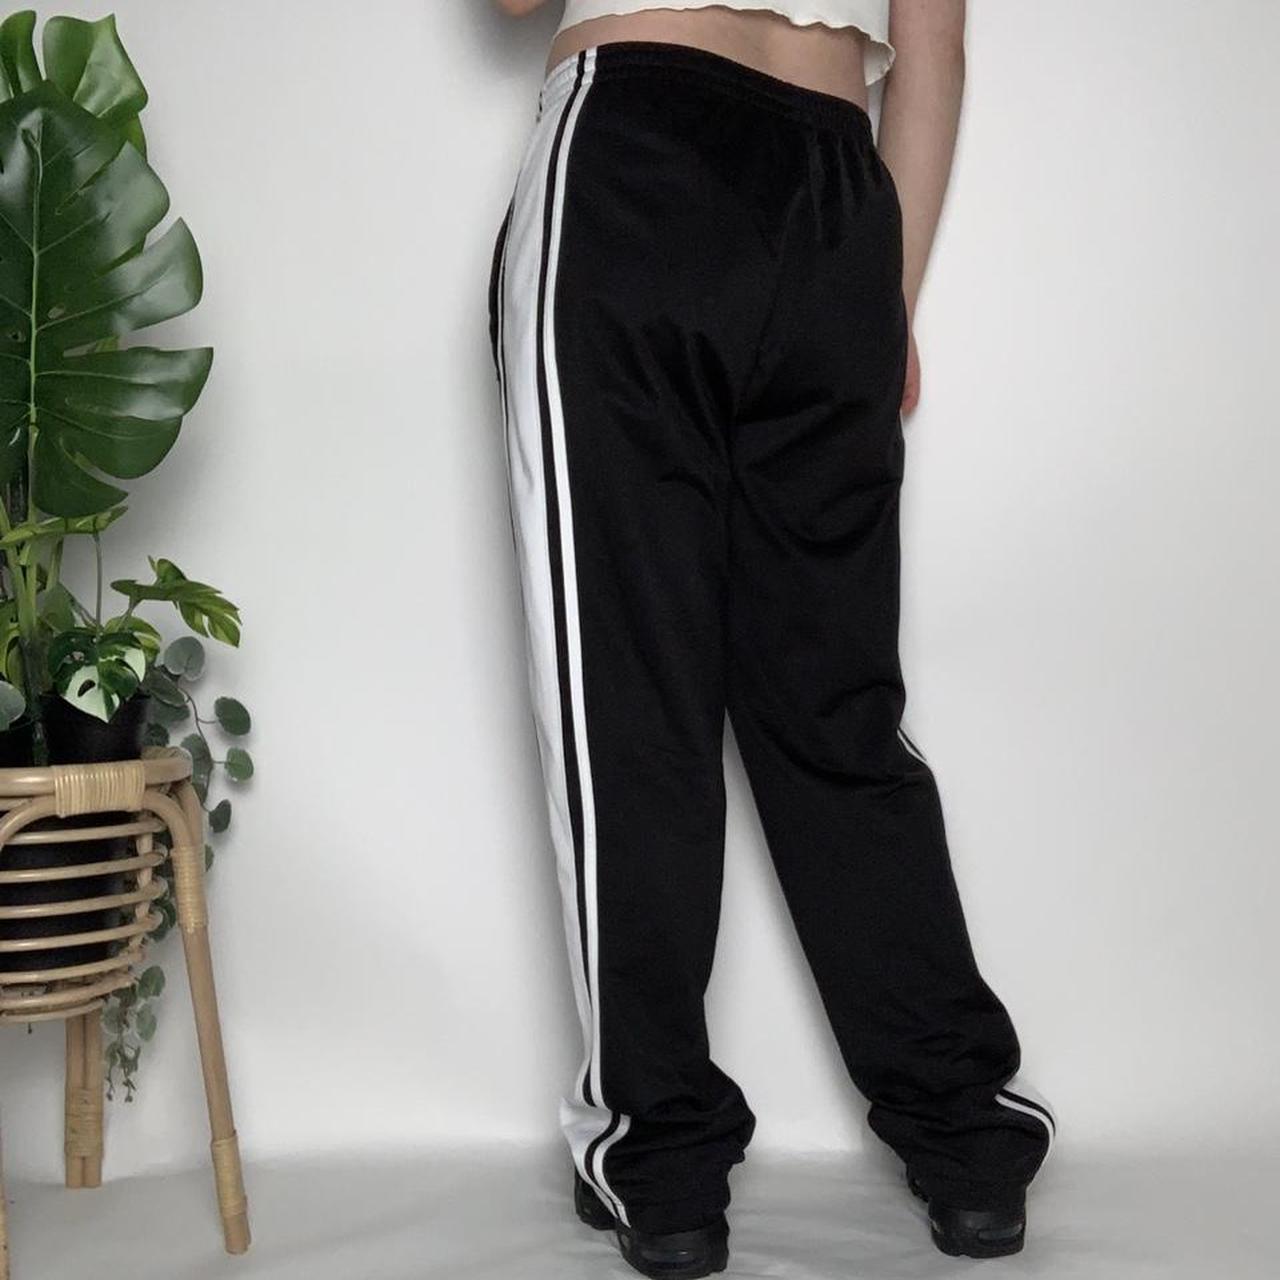 Buy Grey & Black Track Pants for Men by Puma Online | Ajio.com